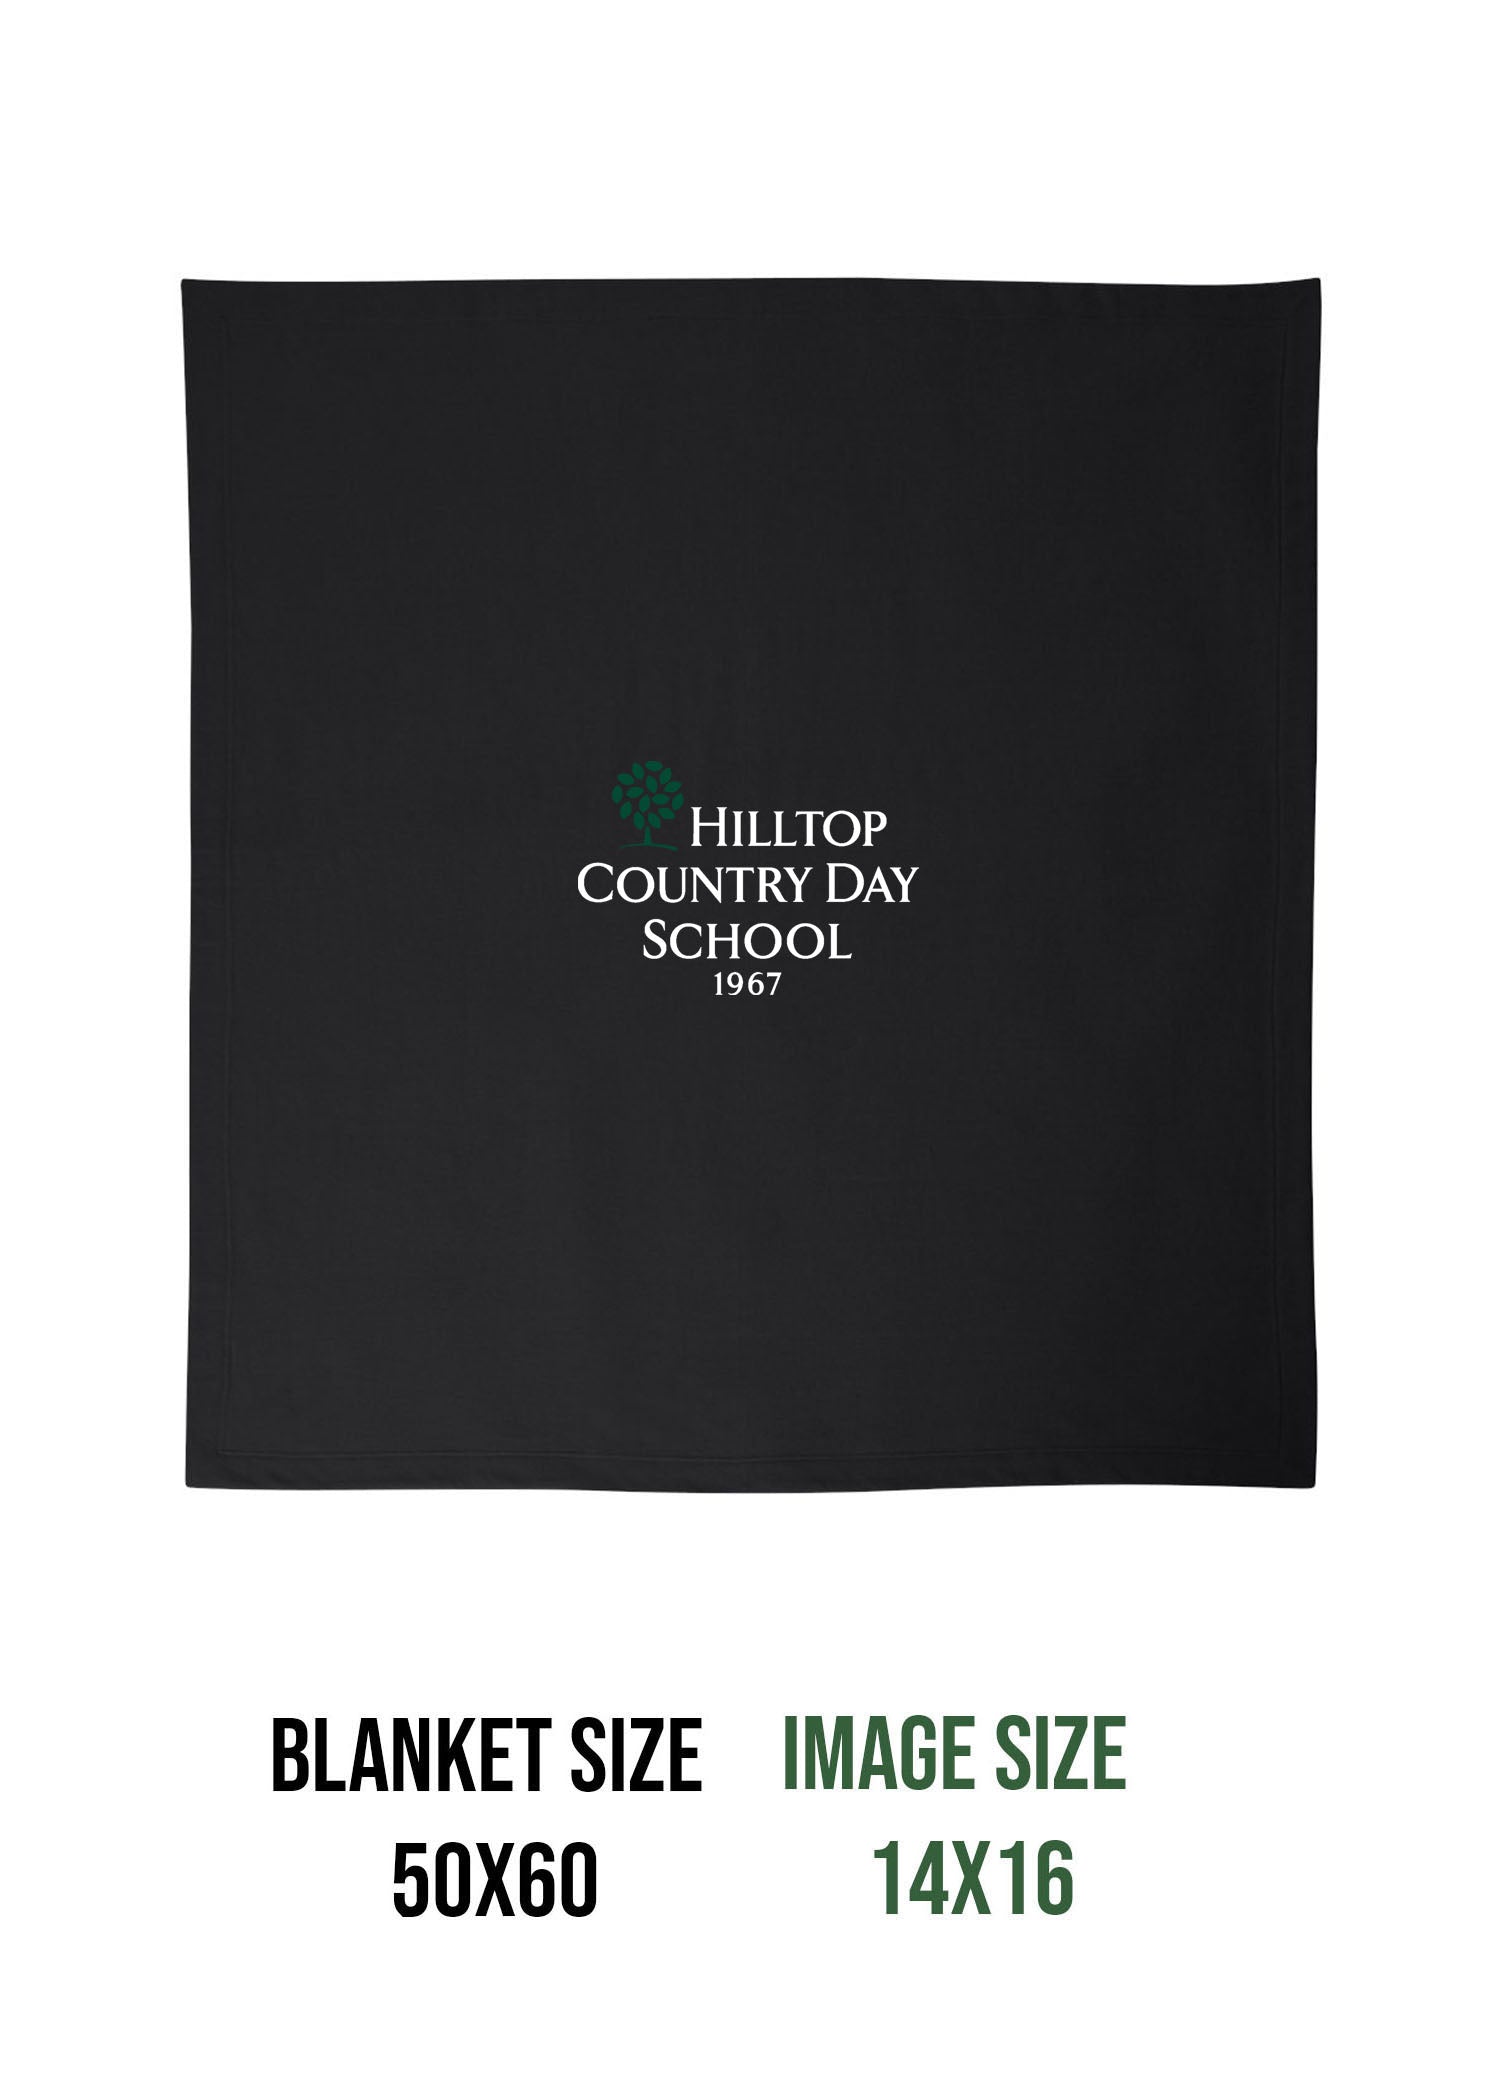 Hilltop Country Day School Design 2 Blanket